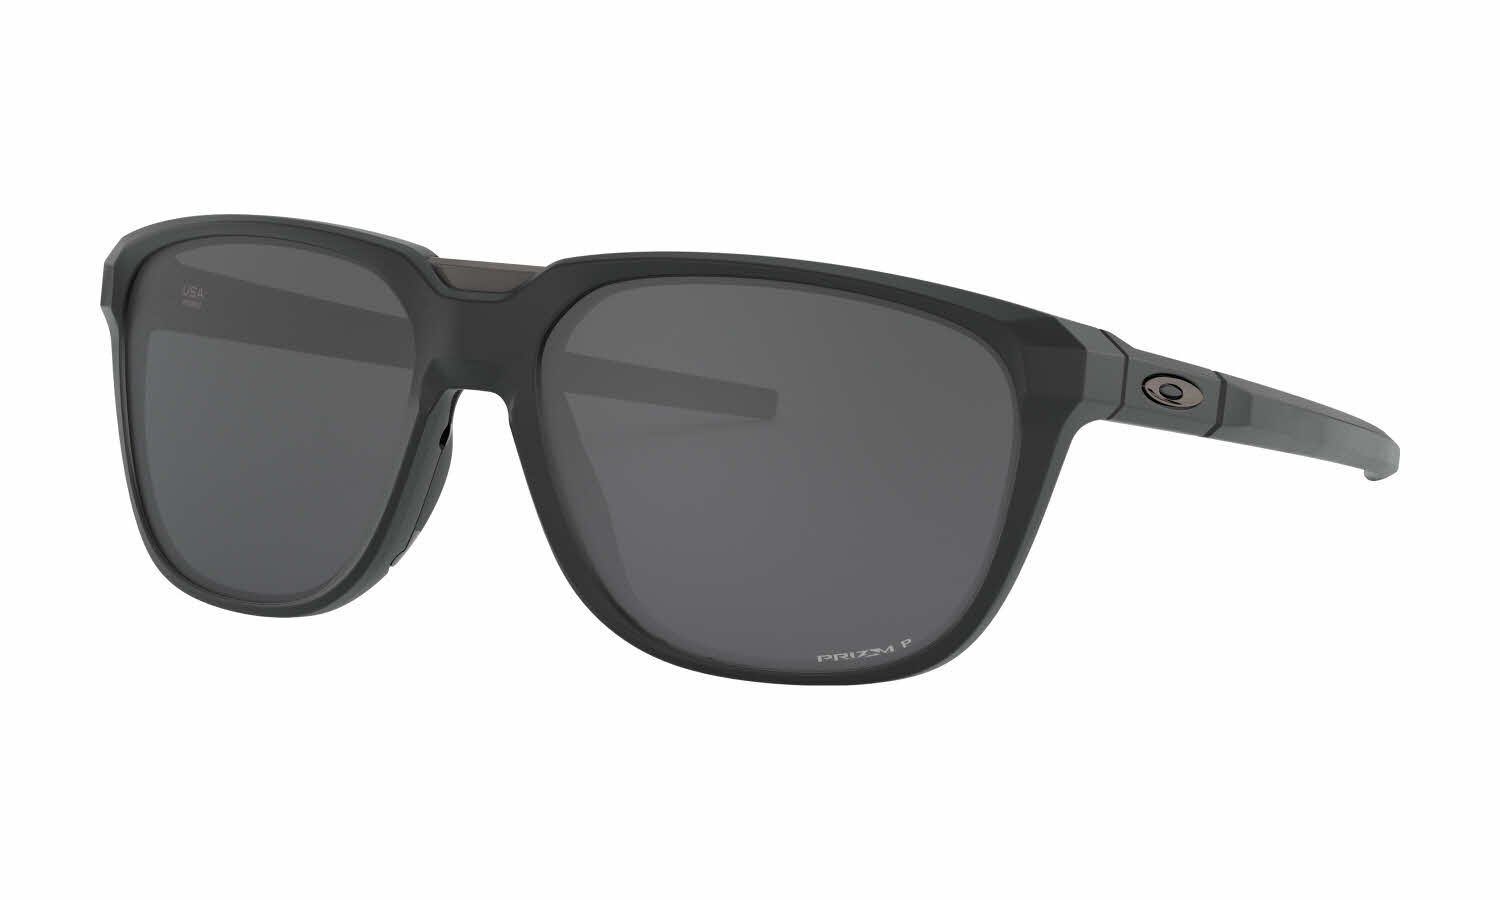 Oakley Anorak Sunglasses